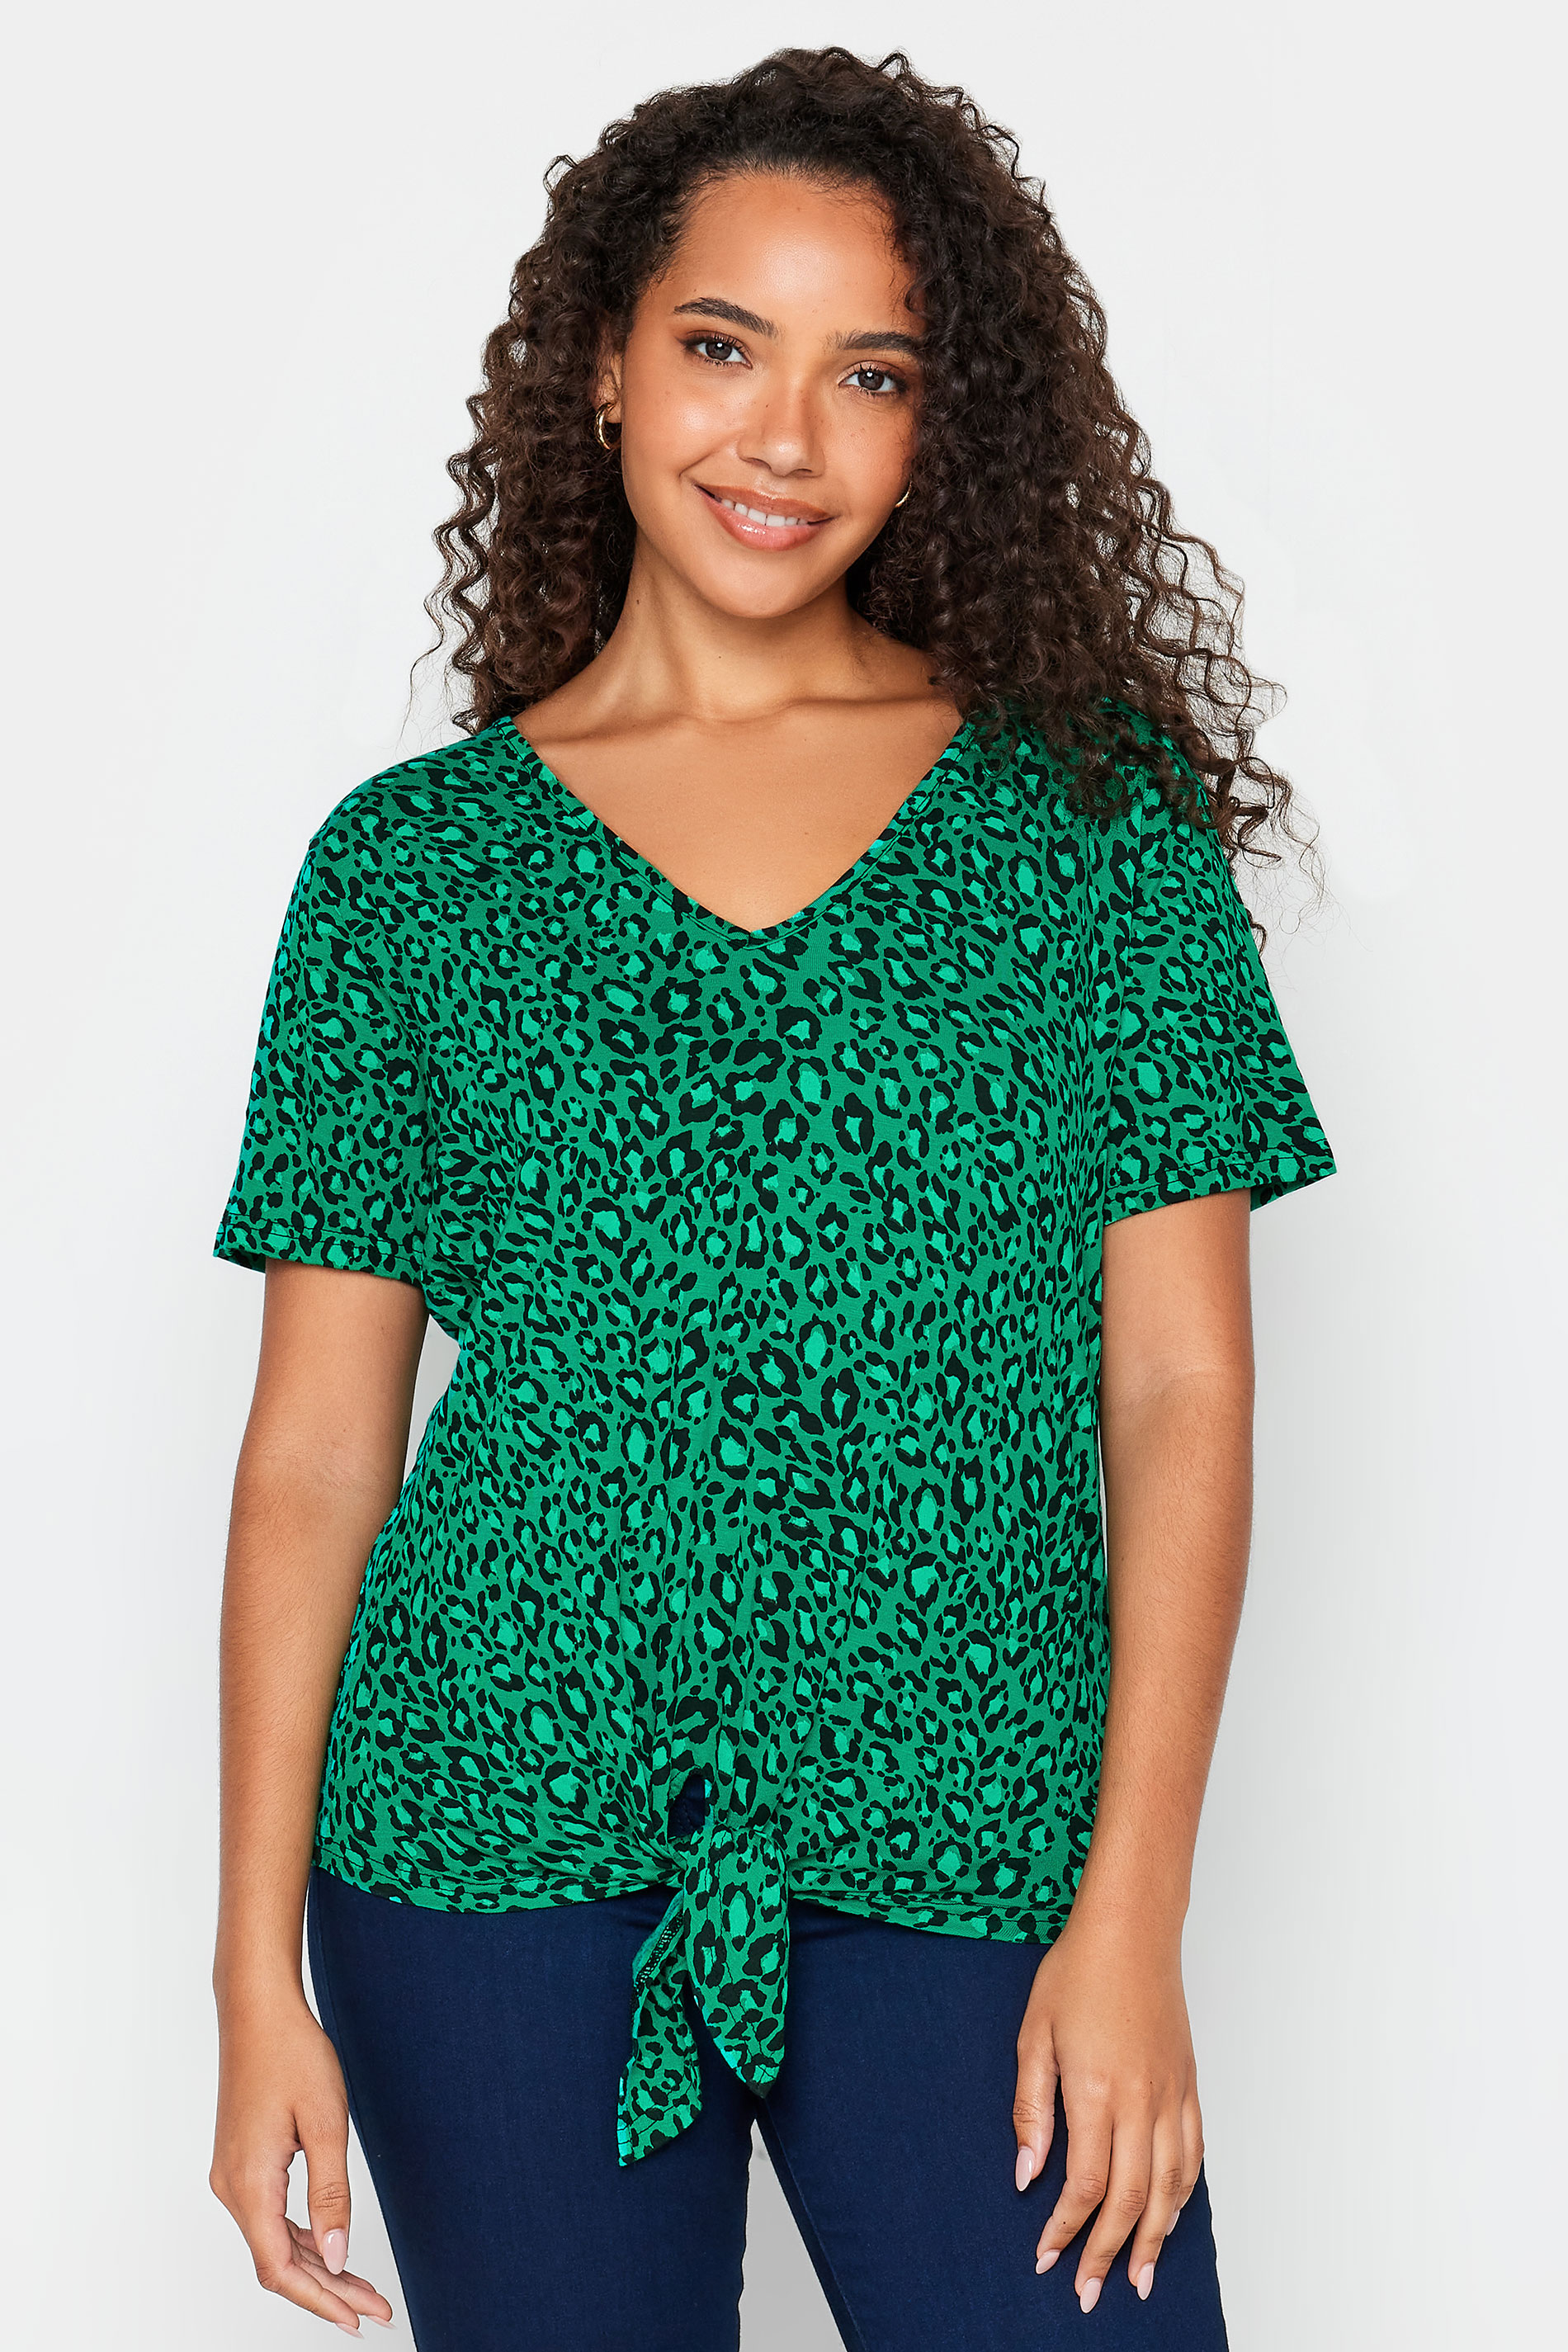 M&Co Green Leopard Print Tie Detail T-Shirt | M&Co  1